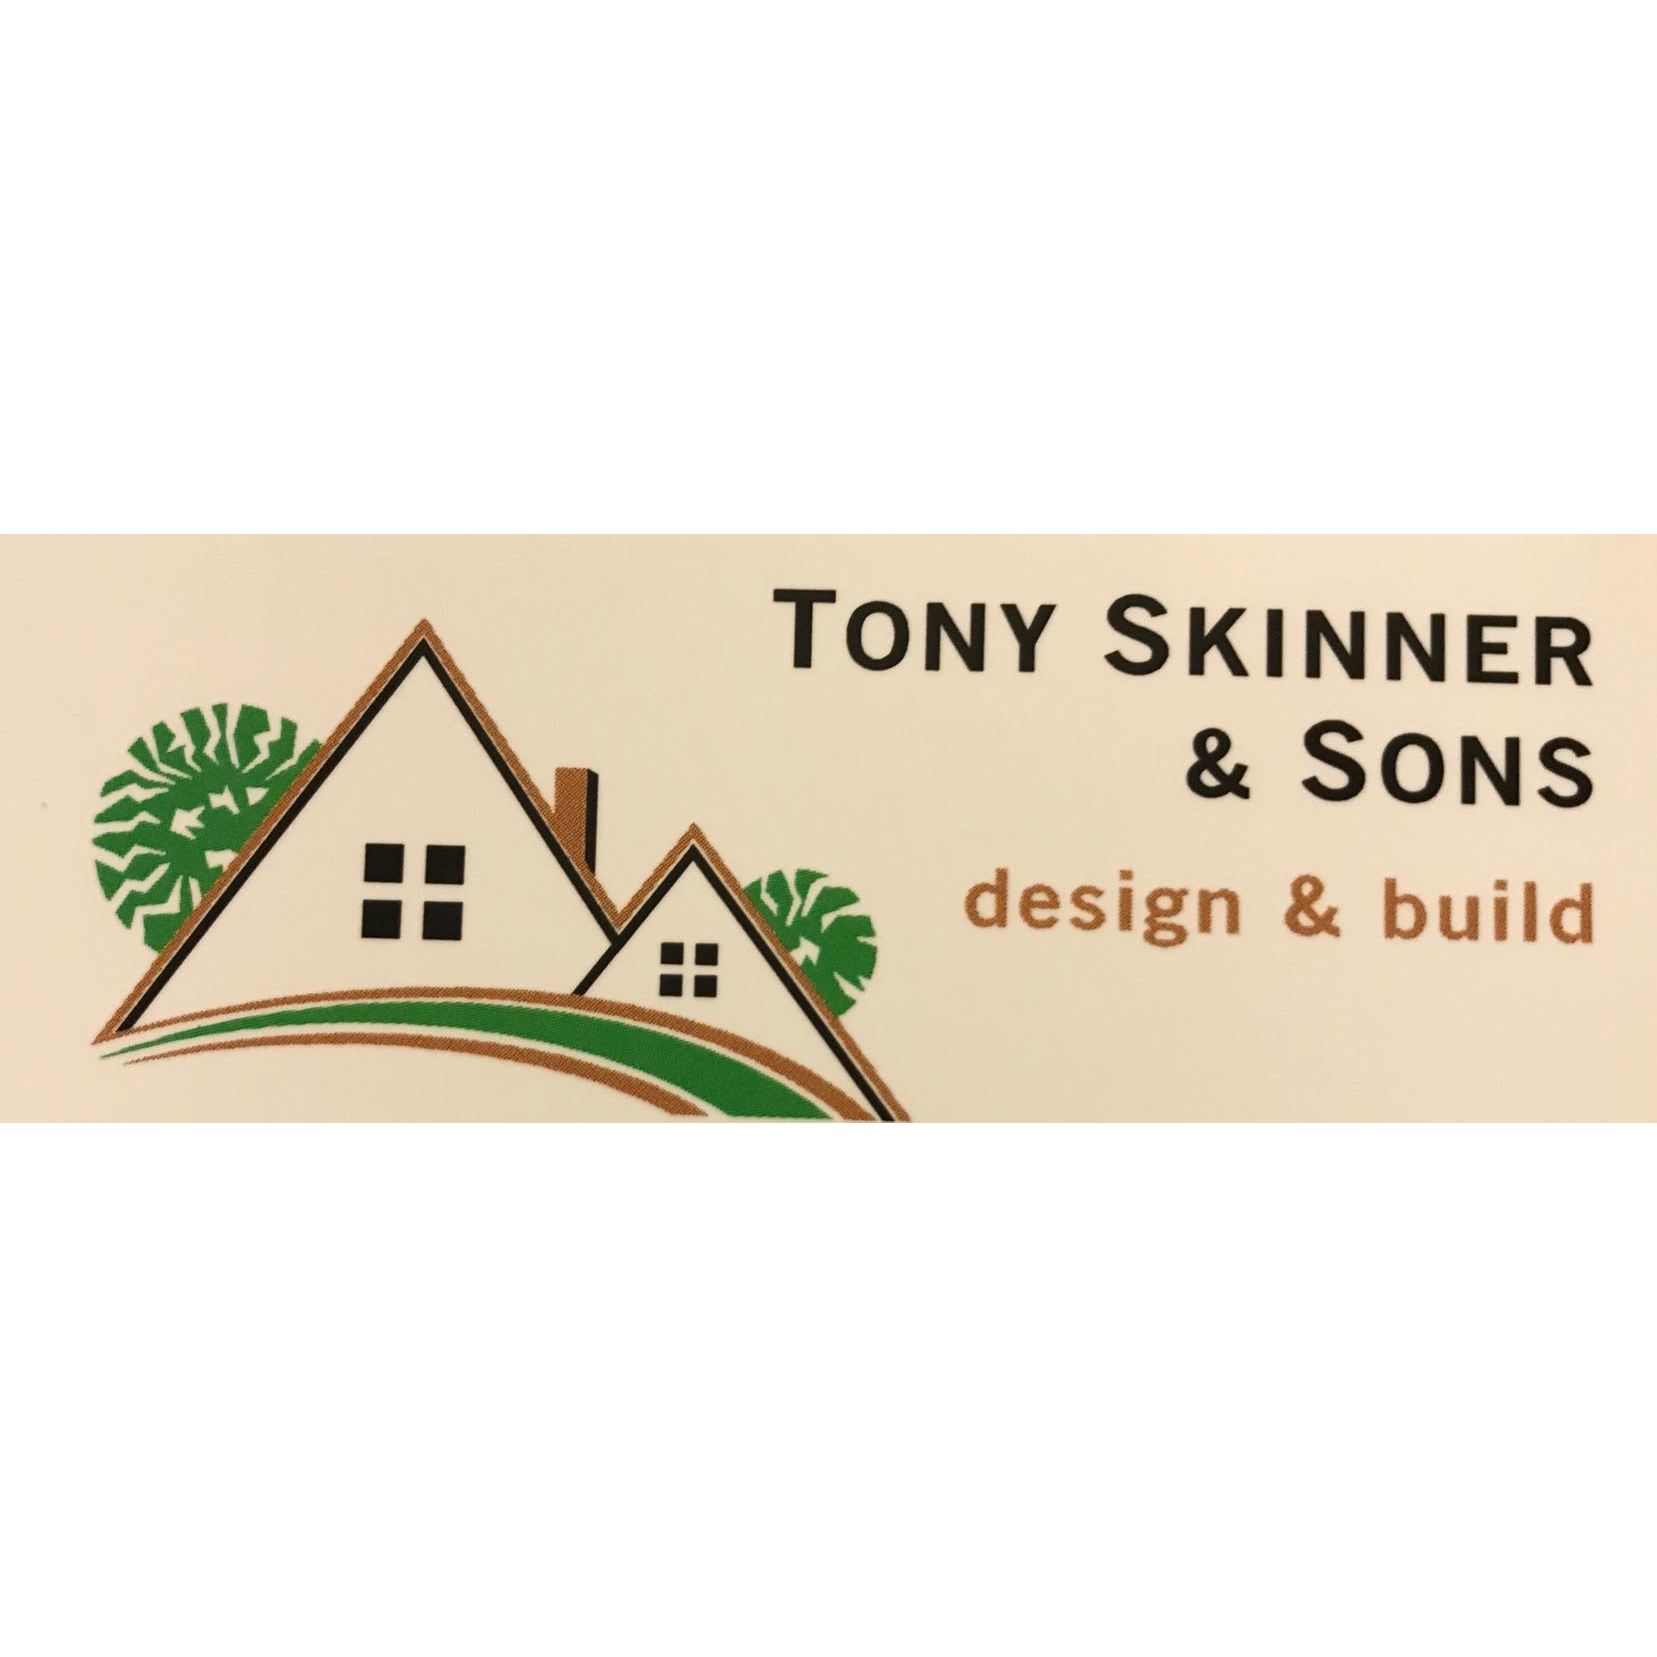 LOGO Tony Skinner & Sons Boston 01205 354443